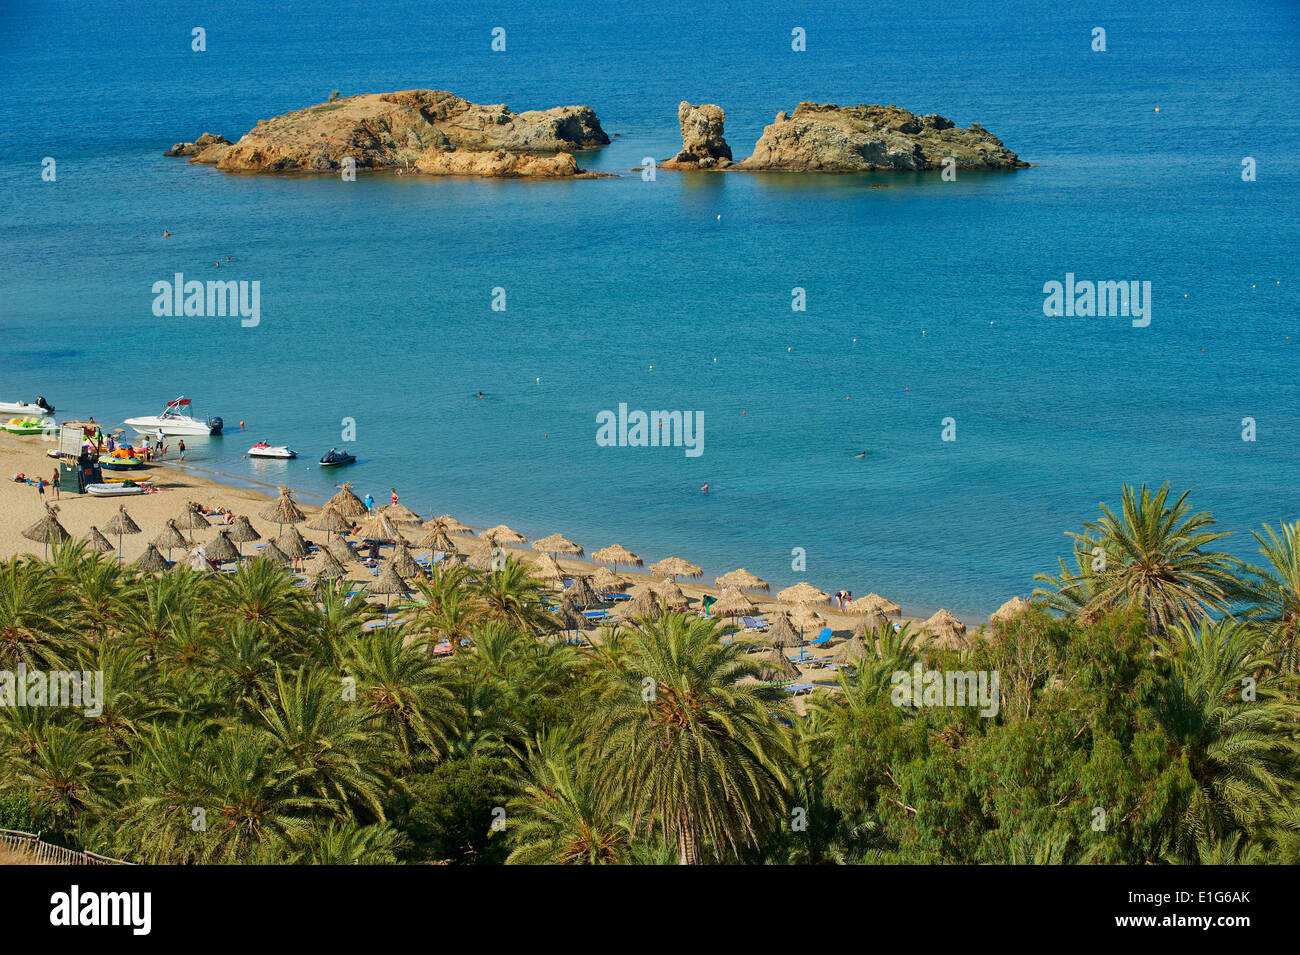 Greece, Crete island, Vai beach and palm trees, eastern Crete Stock Photo